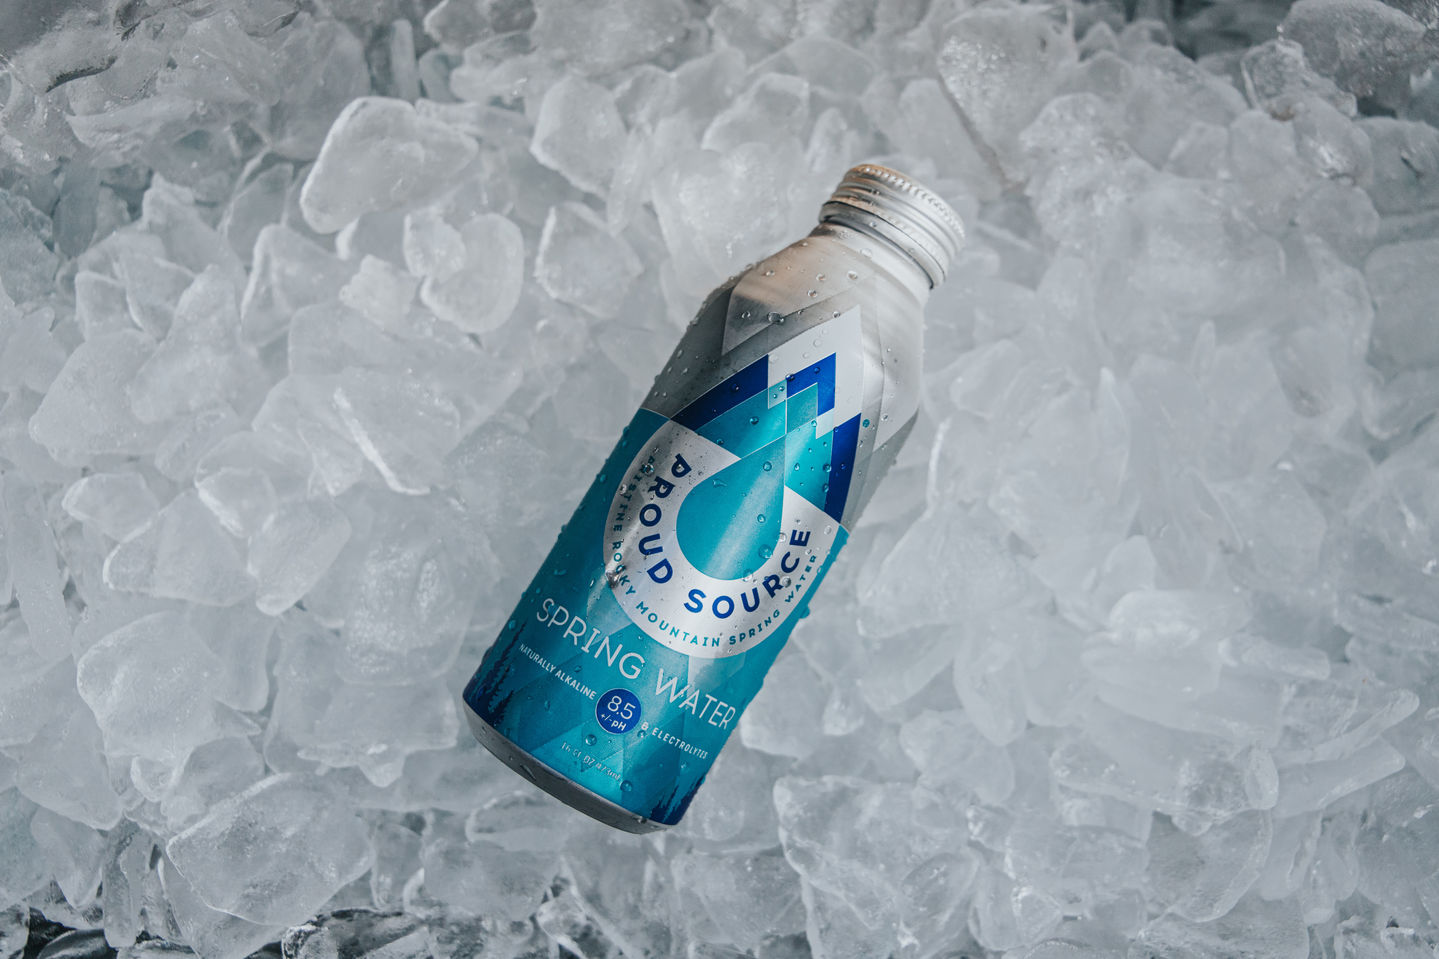 Reusable Proud Source Water Bottle at SnowGlobe Music Festival